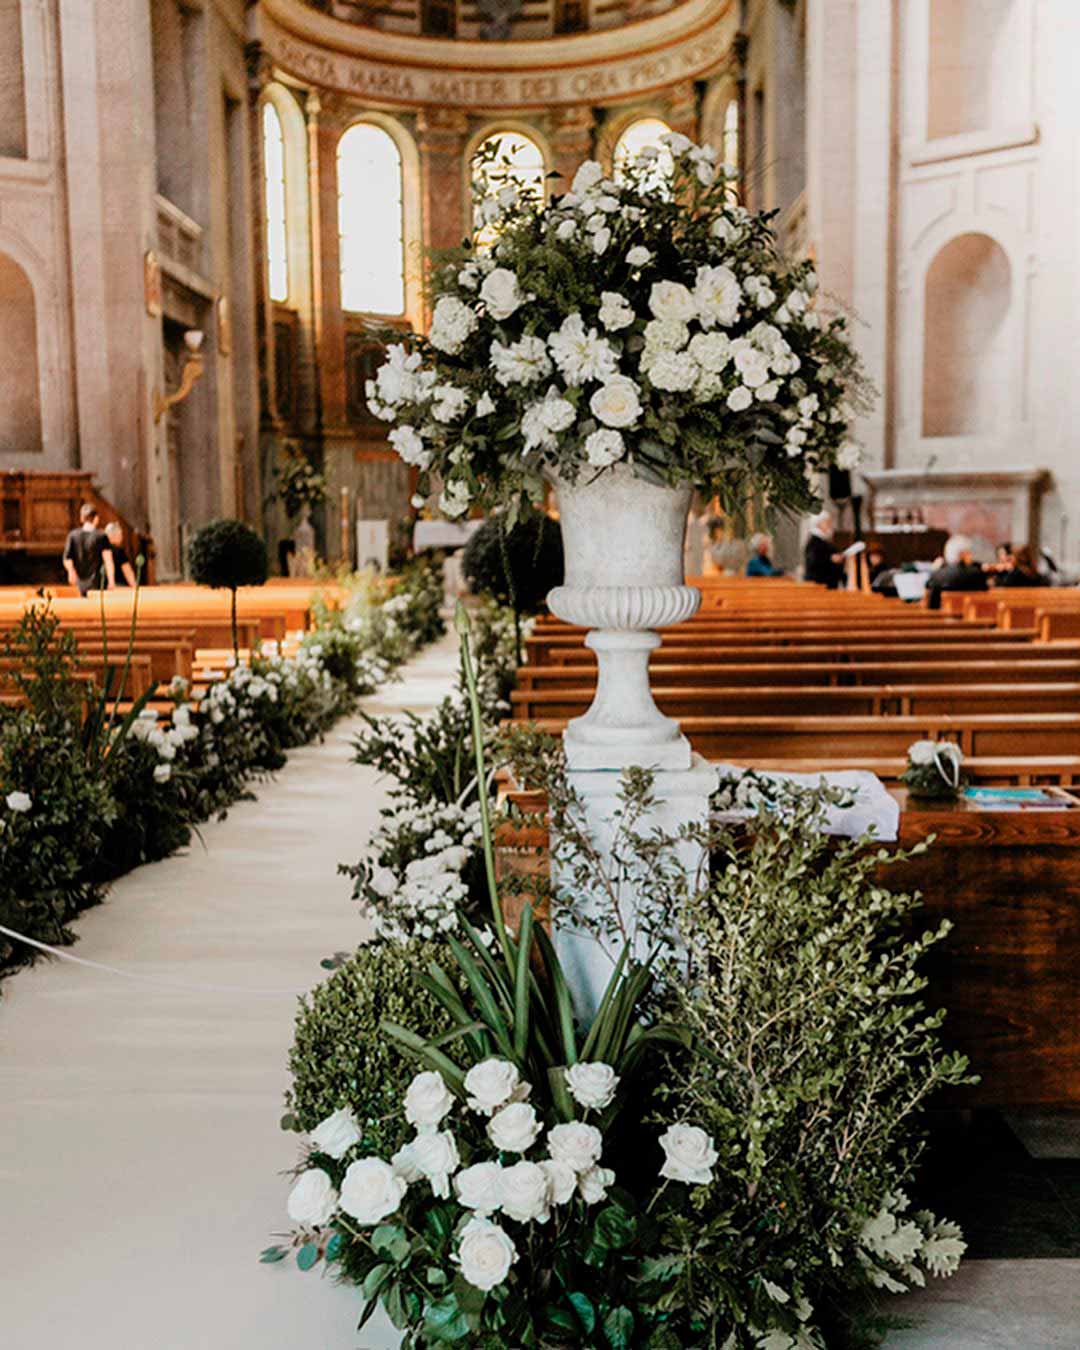 church wedding decorations lights greenery white flowers